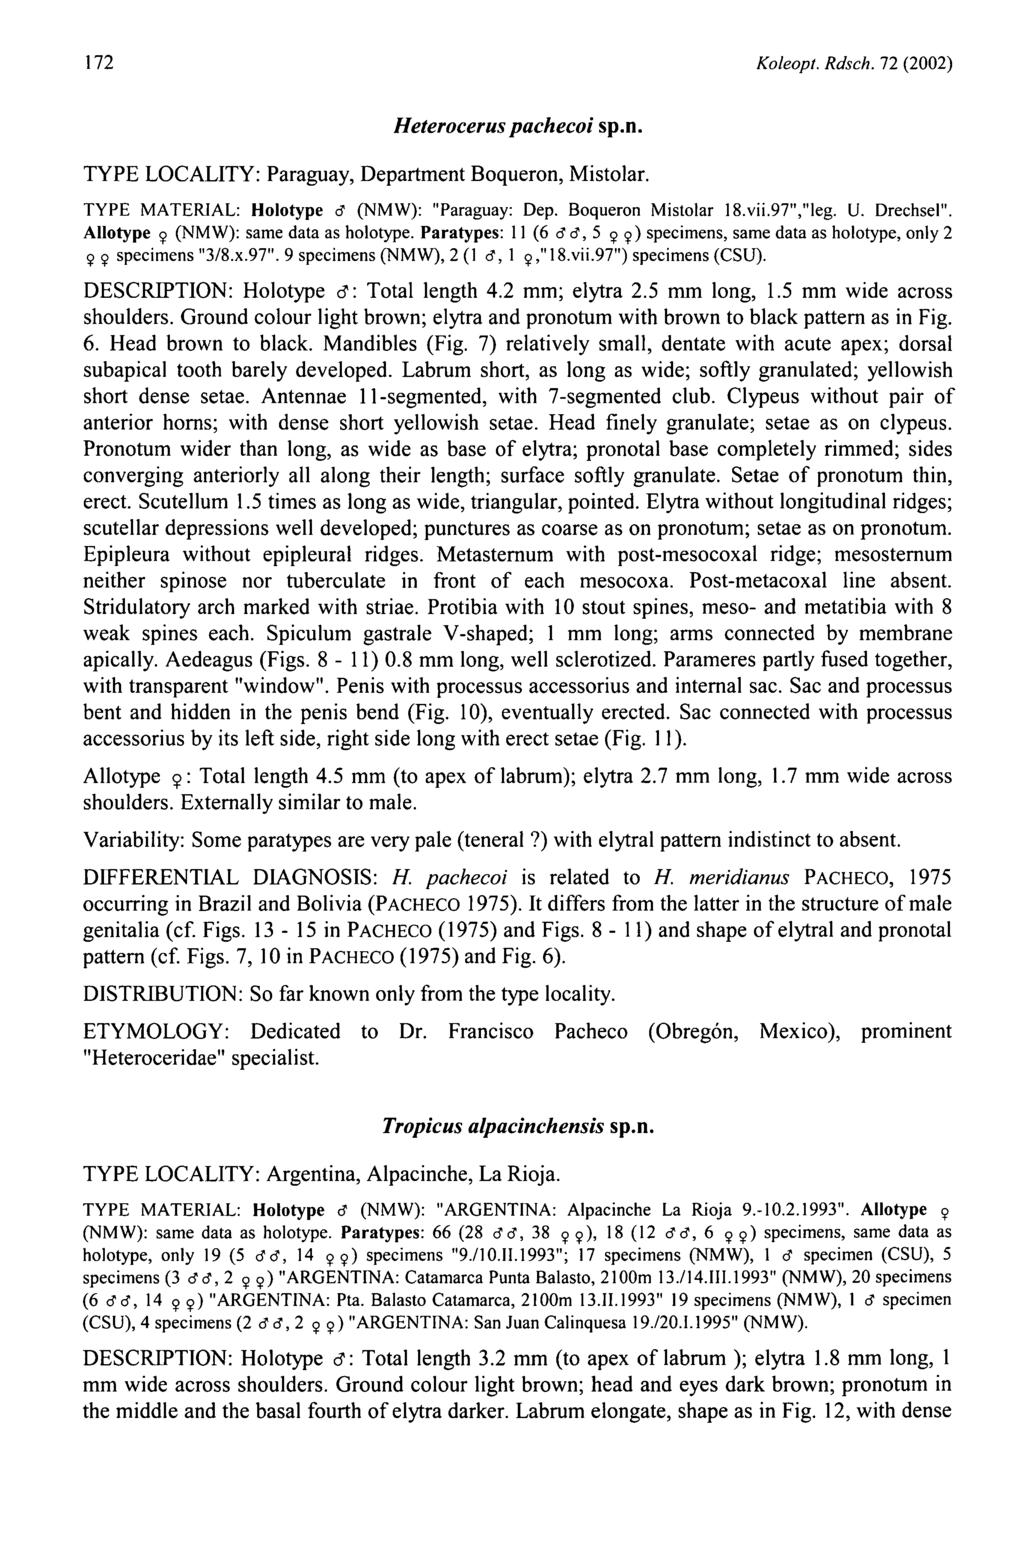 172 Koleopt. Rdsch. 72 (2002) Heterocerus pachecoi sp.n. TYPE LOCALITY: Paraguay, Department Boqueron, Mistolar. TYPE MATERIAL: Holotype d (NMW): "Paraguay: Dep. Boqueron Mistolar 18.vii.97","leg. U.